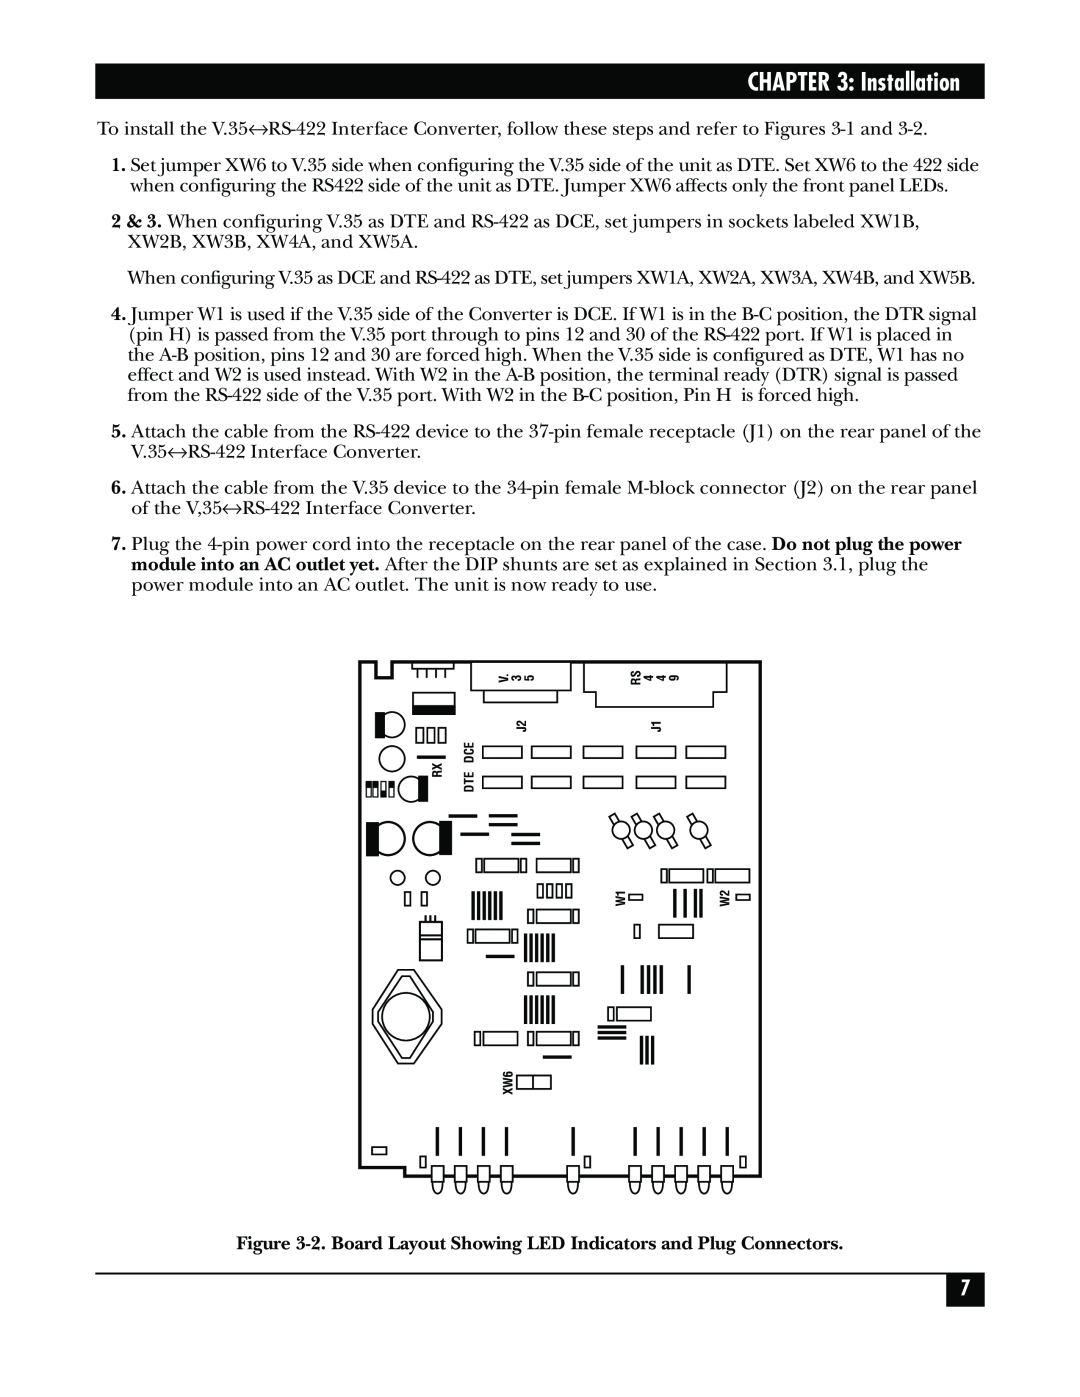 Black Box IC481C-R2, IC483C, IC483AE, IC481A-R2 Installation, 2. Board Layout Showing LED Indicators and Plug Connectors 